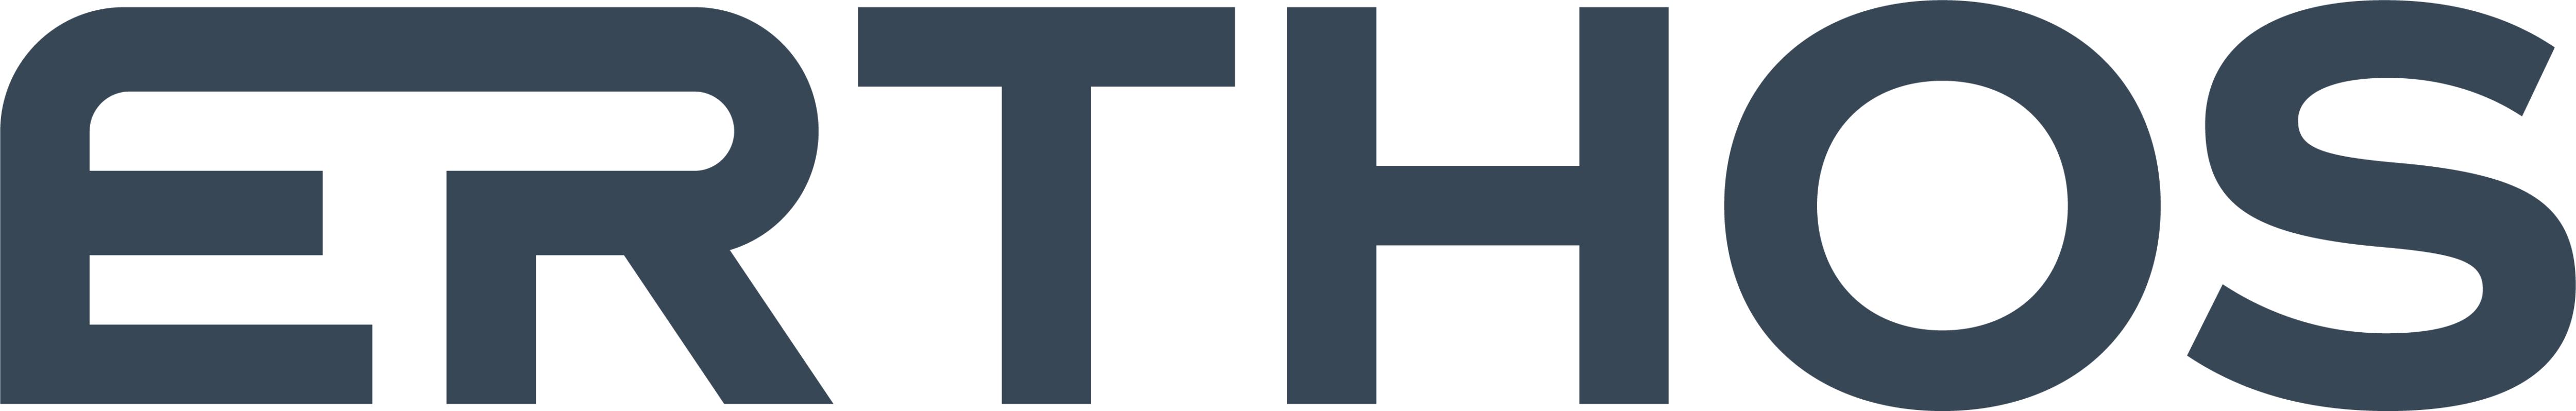 Erthos Logo